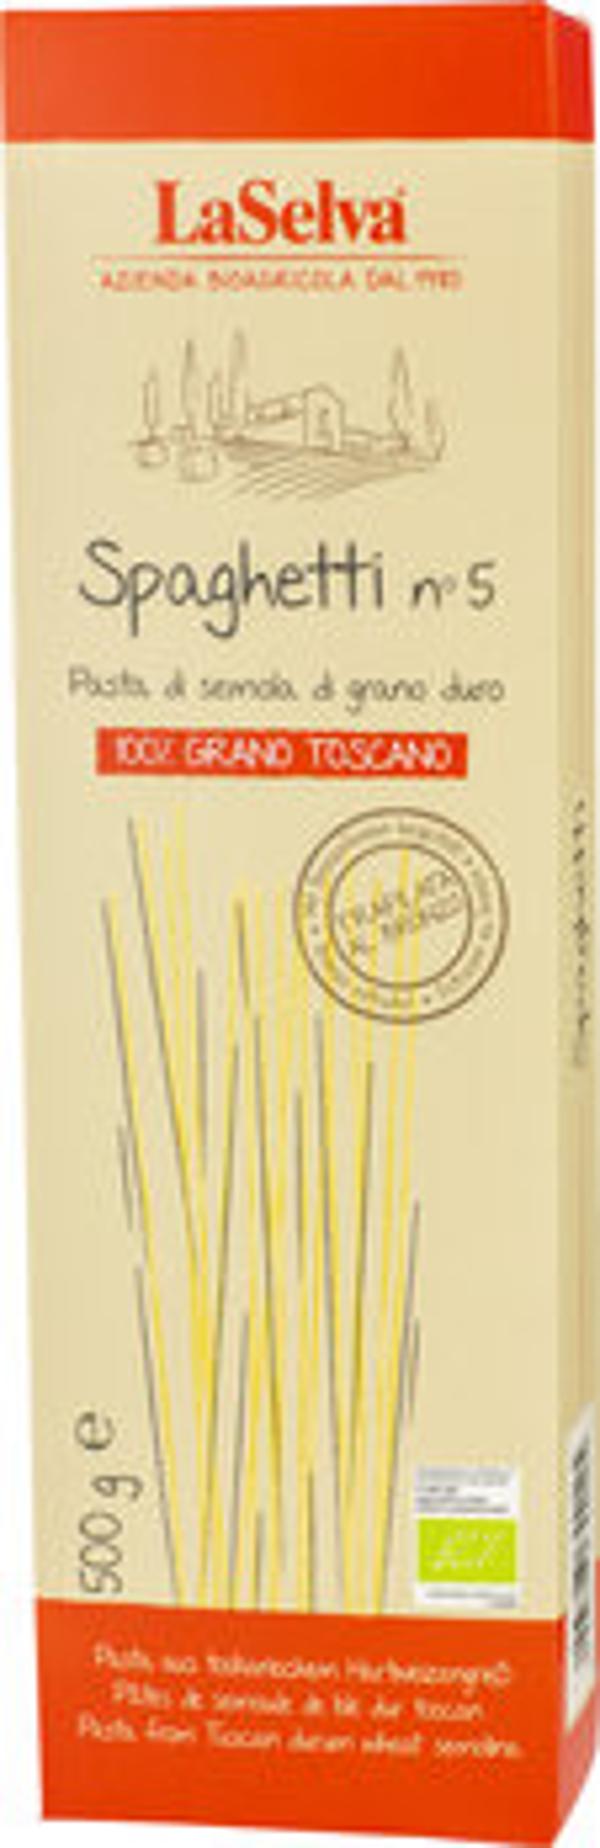 Produktfoto zu Spaghetti nr 5 Pasta Toscana